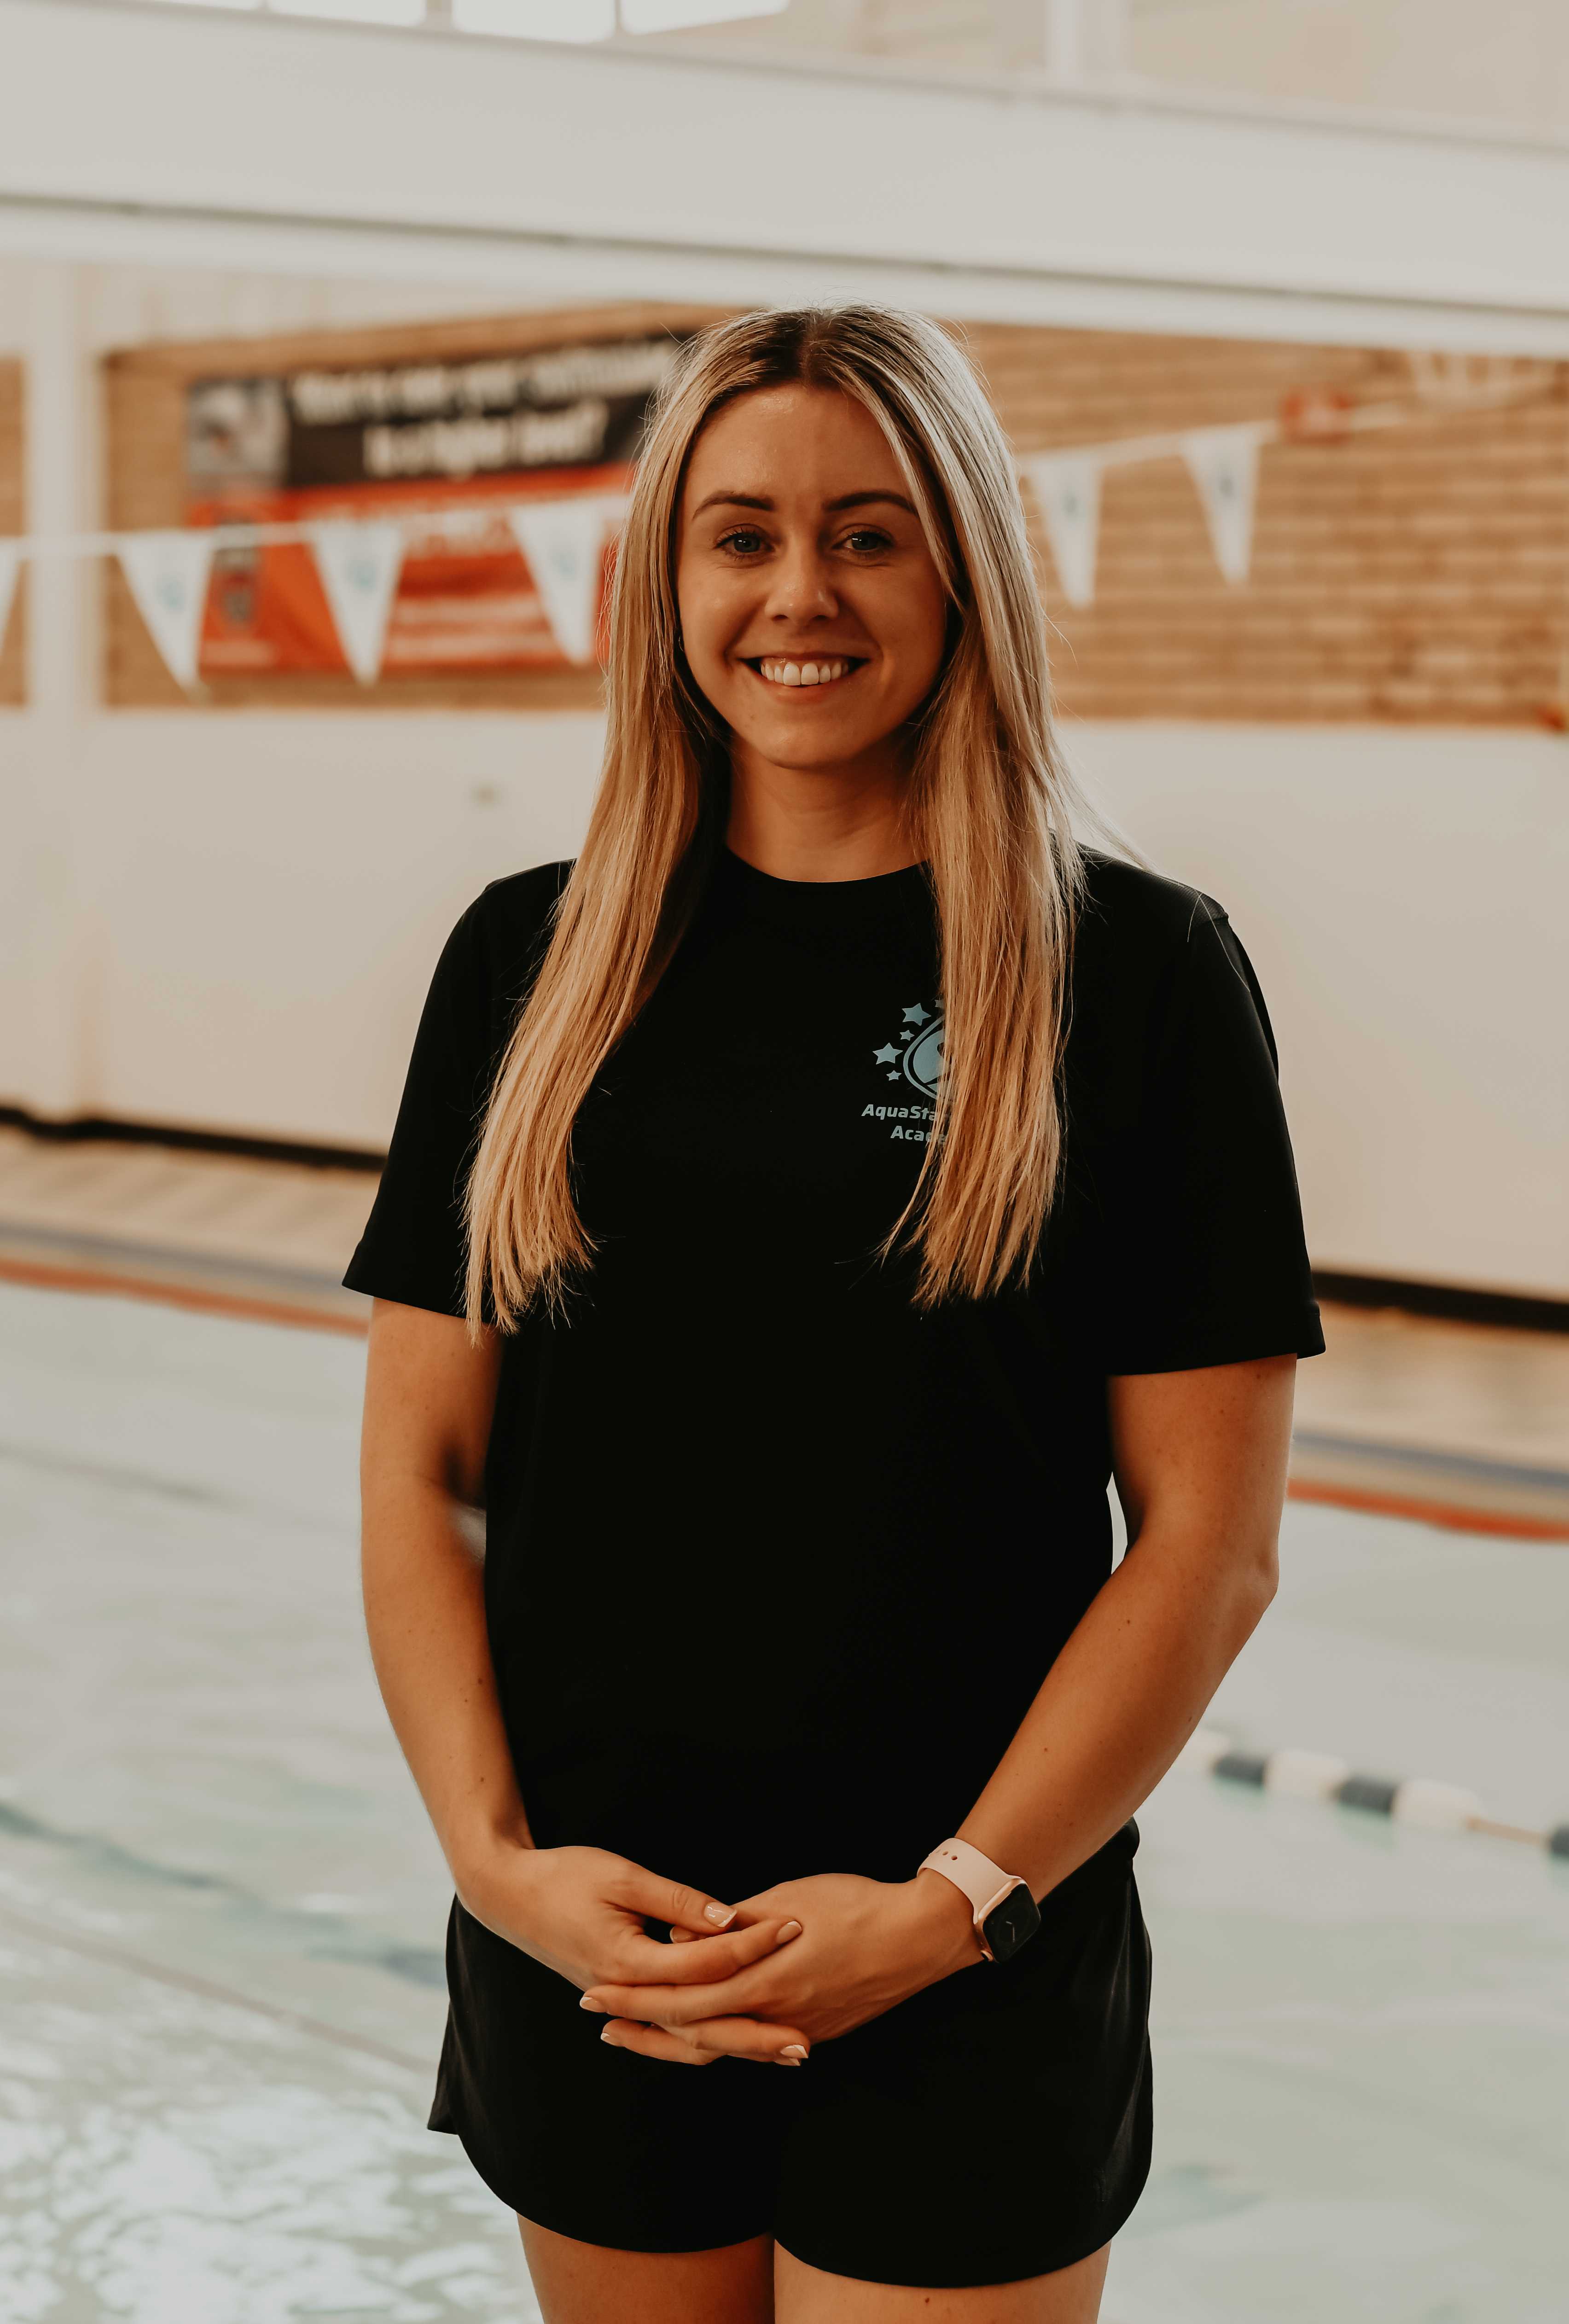 Rae Adler, Founder of AquaStars Swim & Training Academy